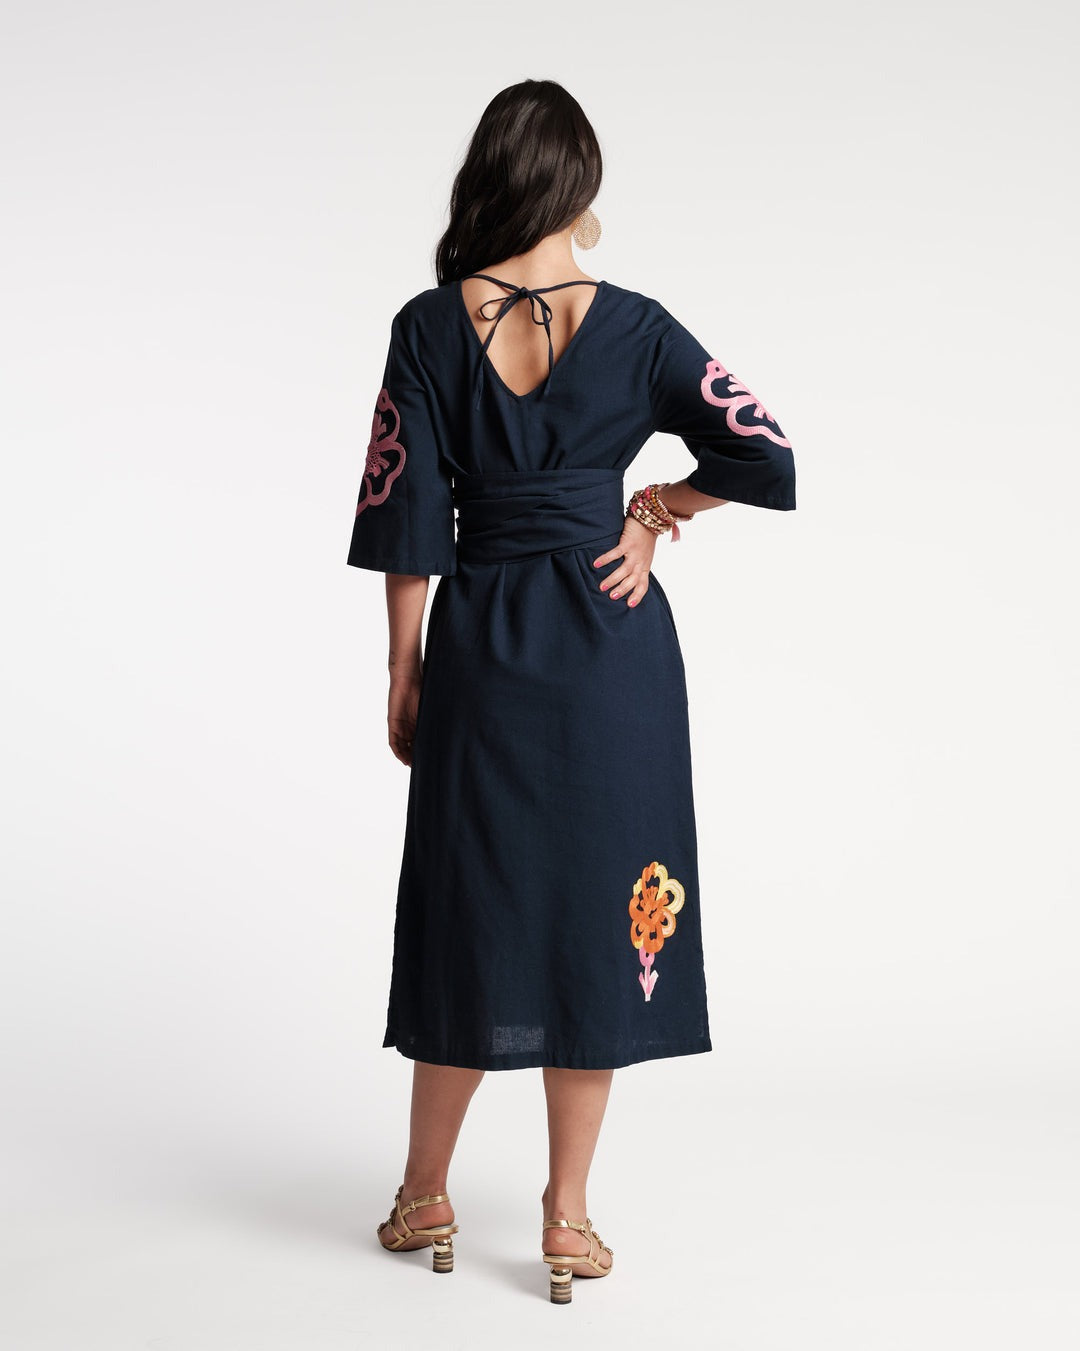 Frances Valentine Emi Dress Graphic Gerbera Cotton Linen Navy/Pink